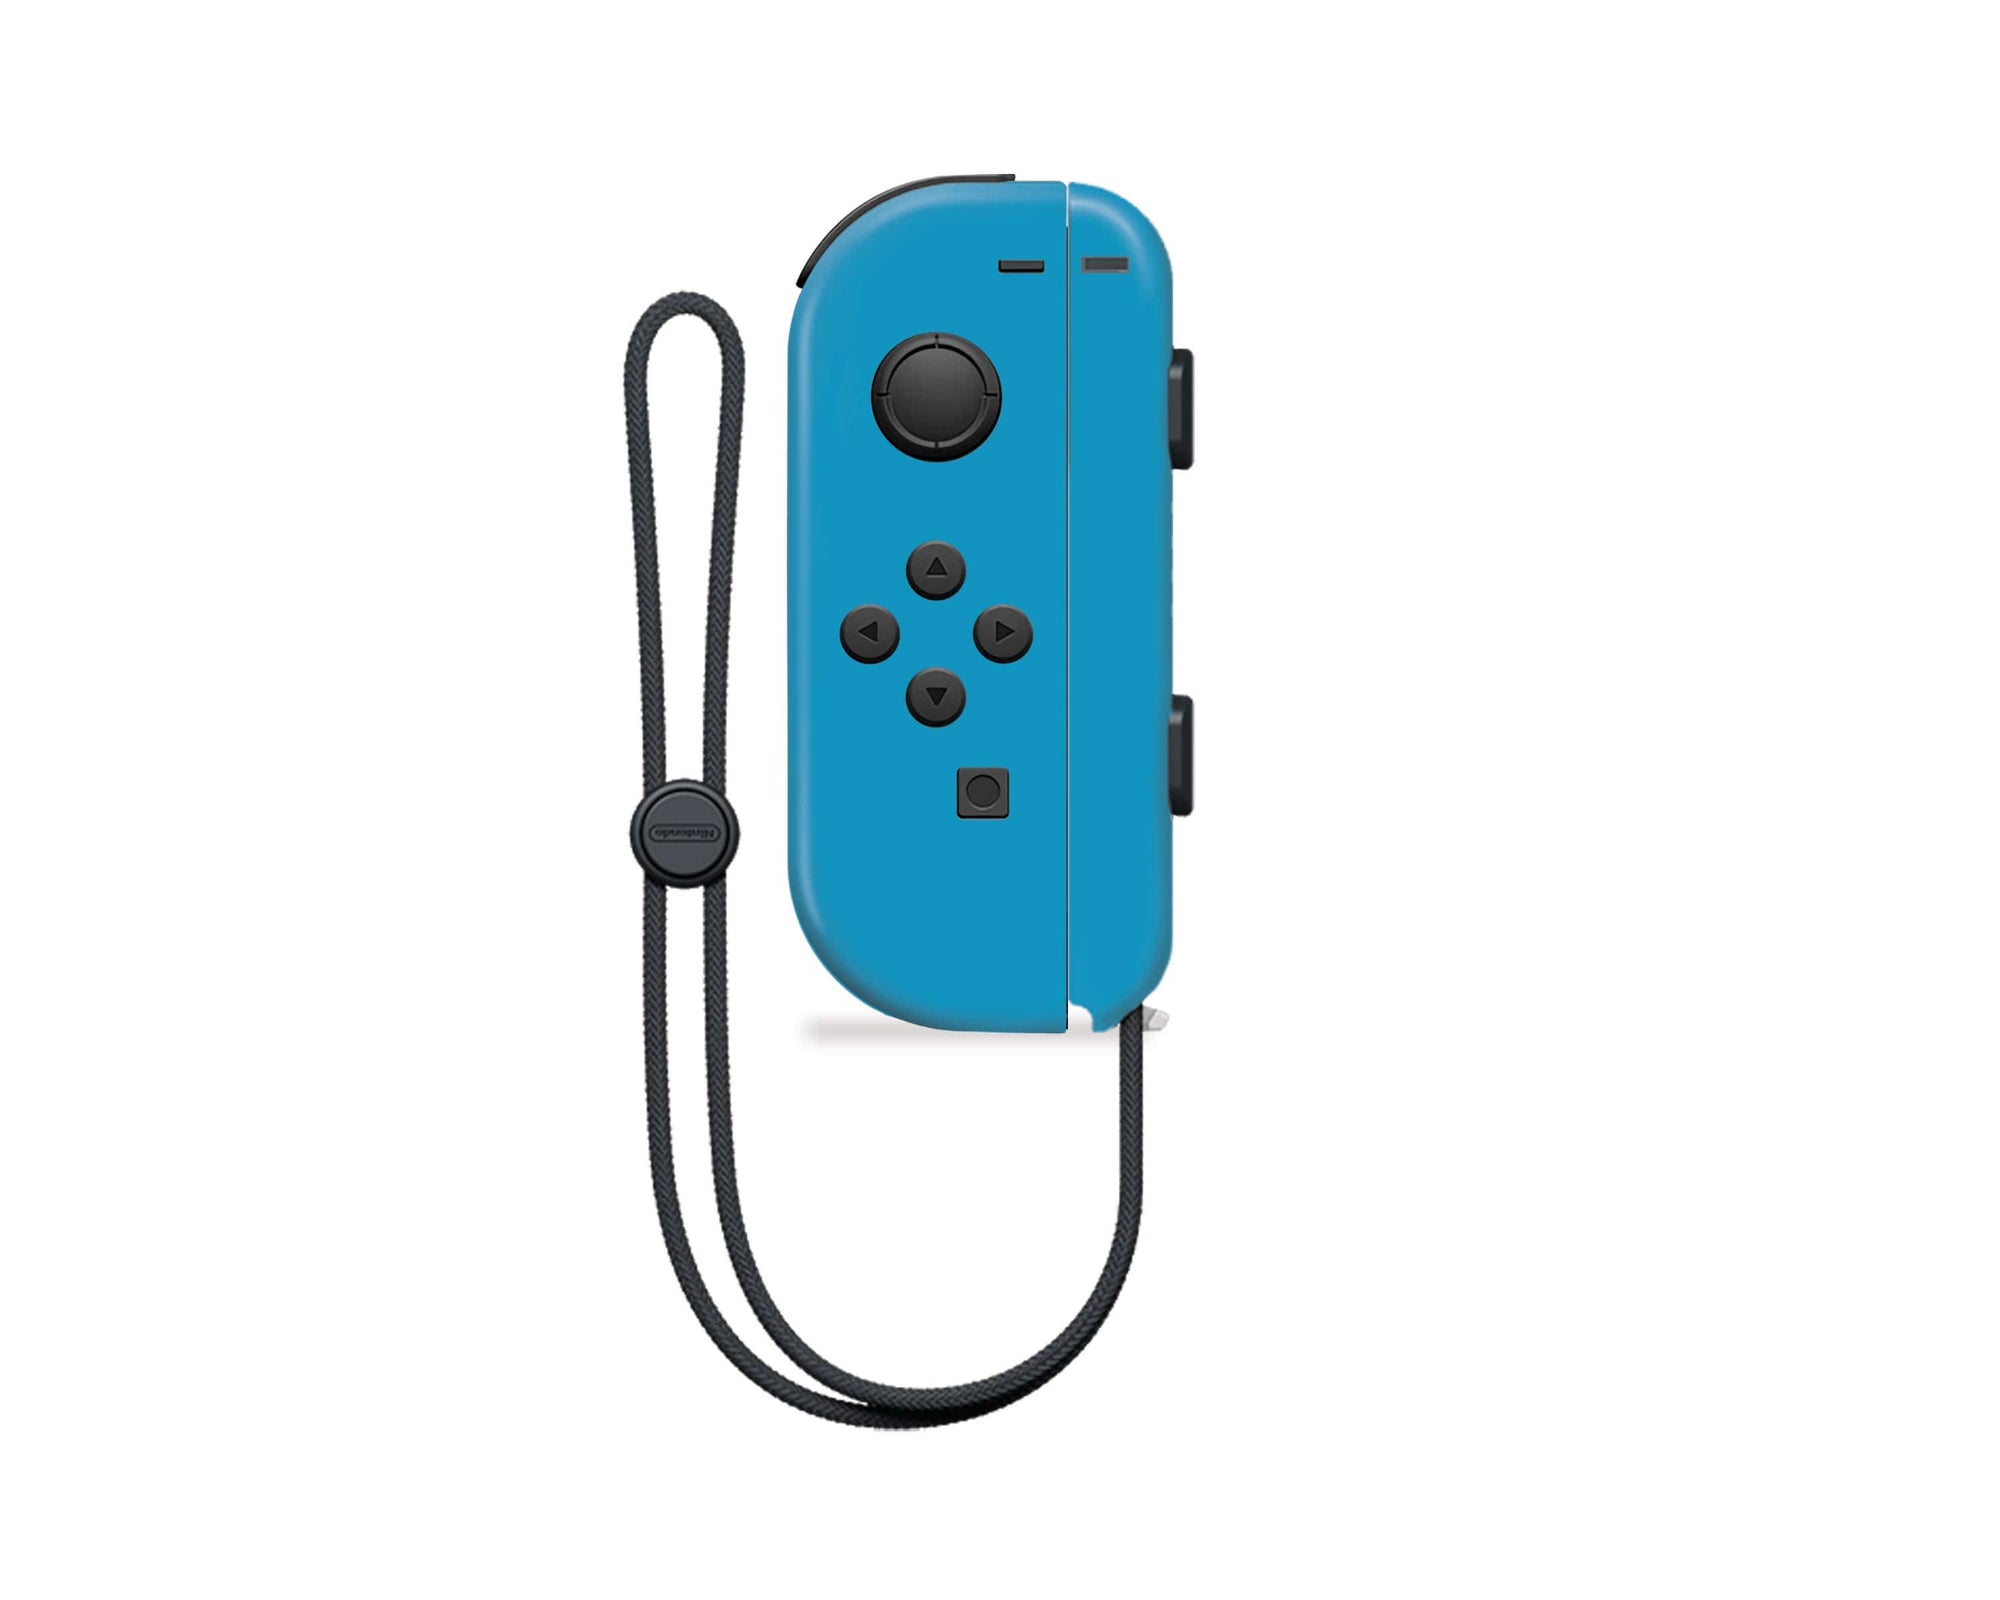 & Match - Classic Color Nintendo Switch Joy-Con - StickyBunny